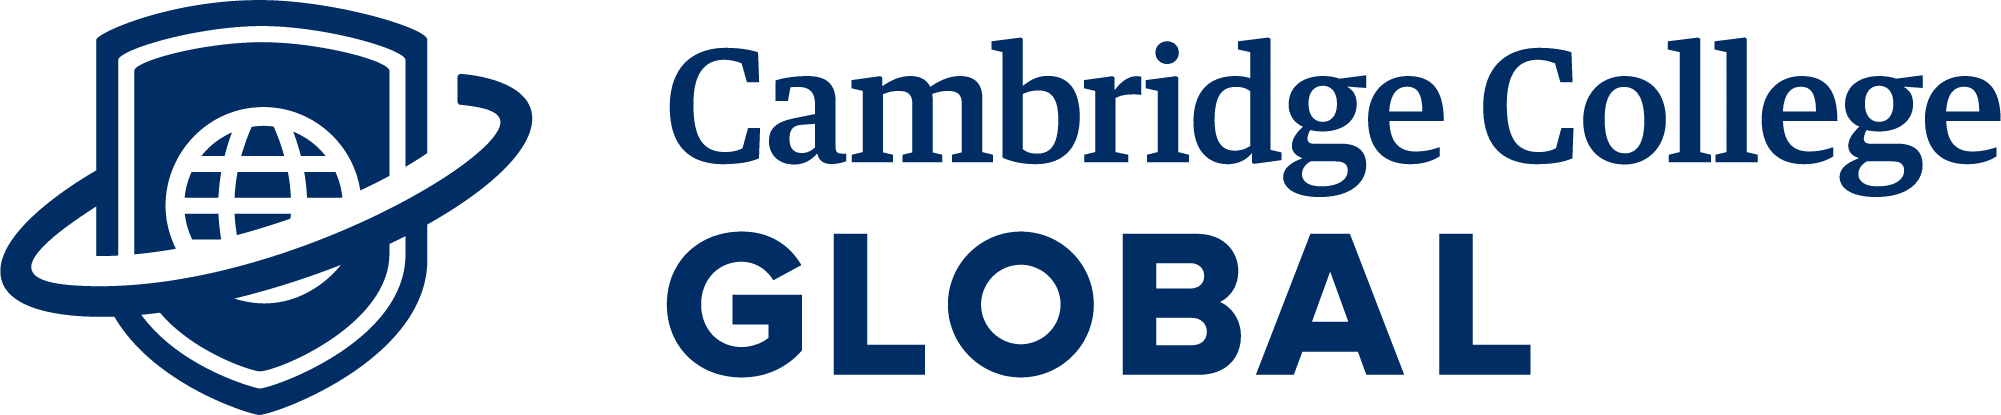 Cambridge College Global